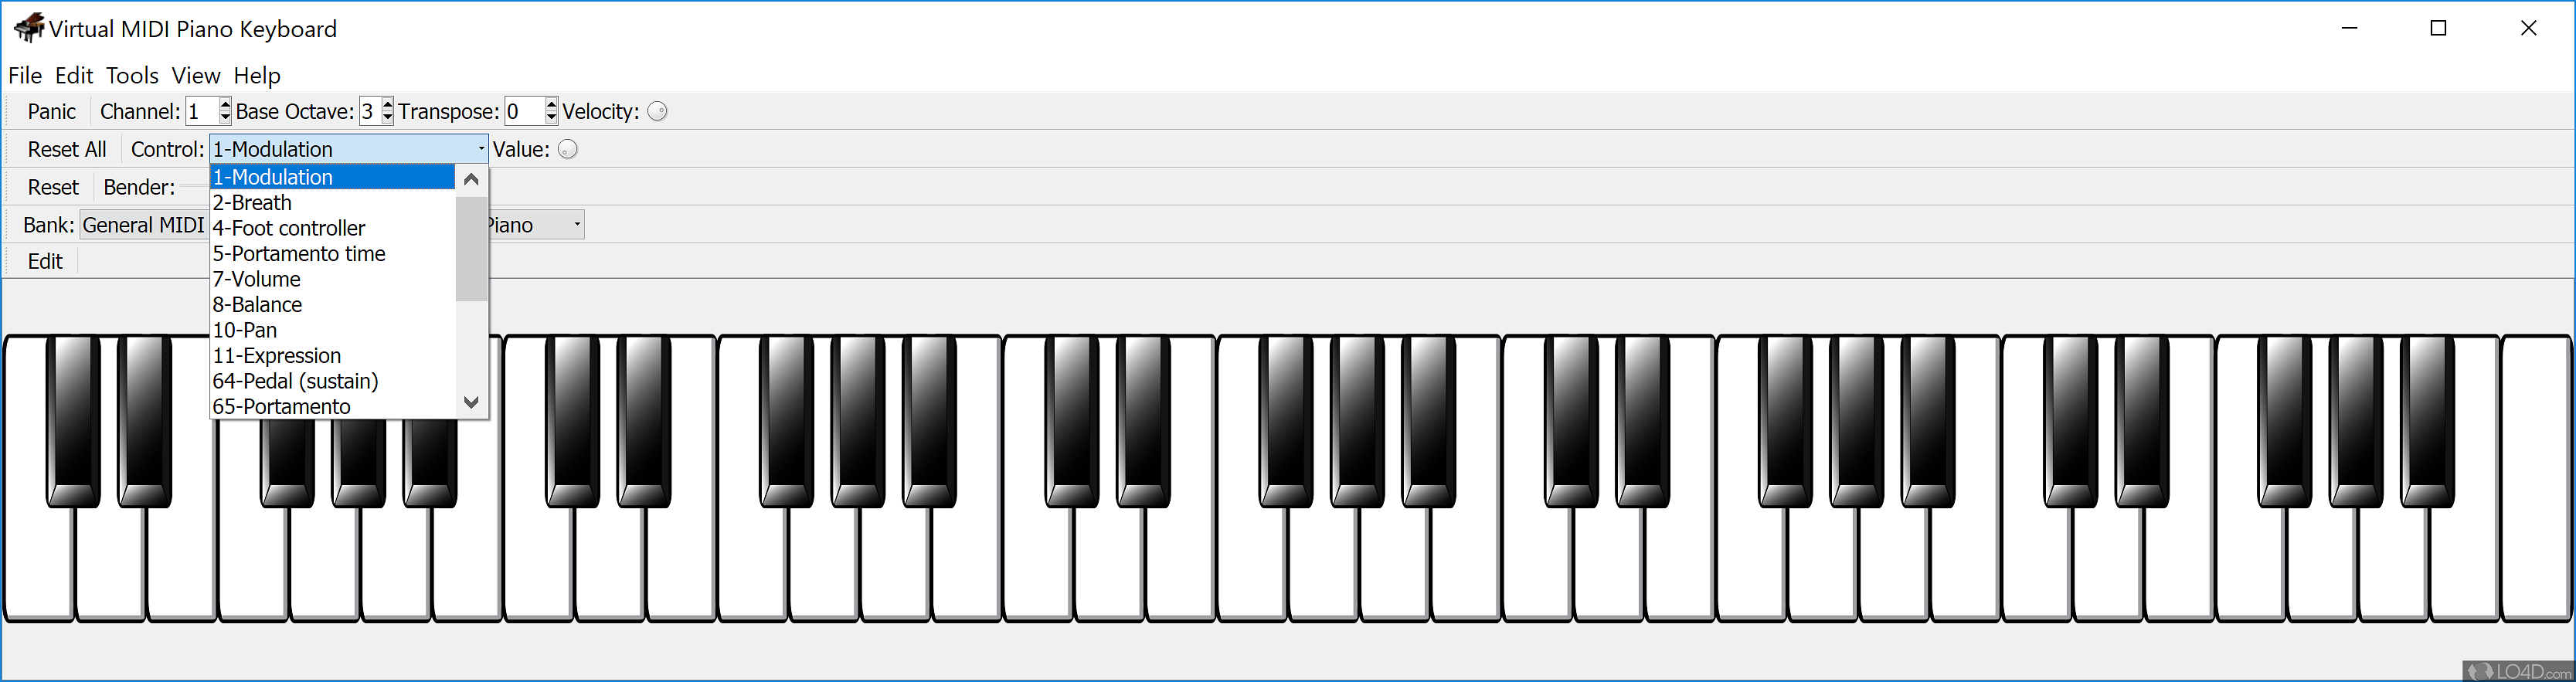 descargar virtual midi piano keyboard